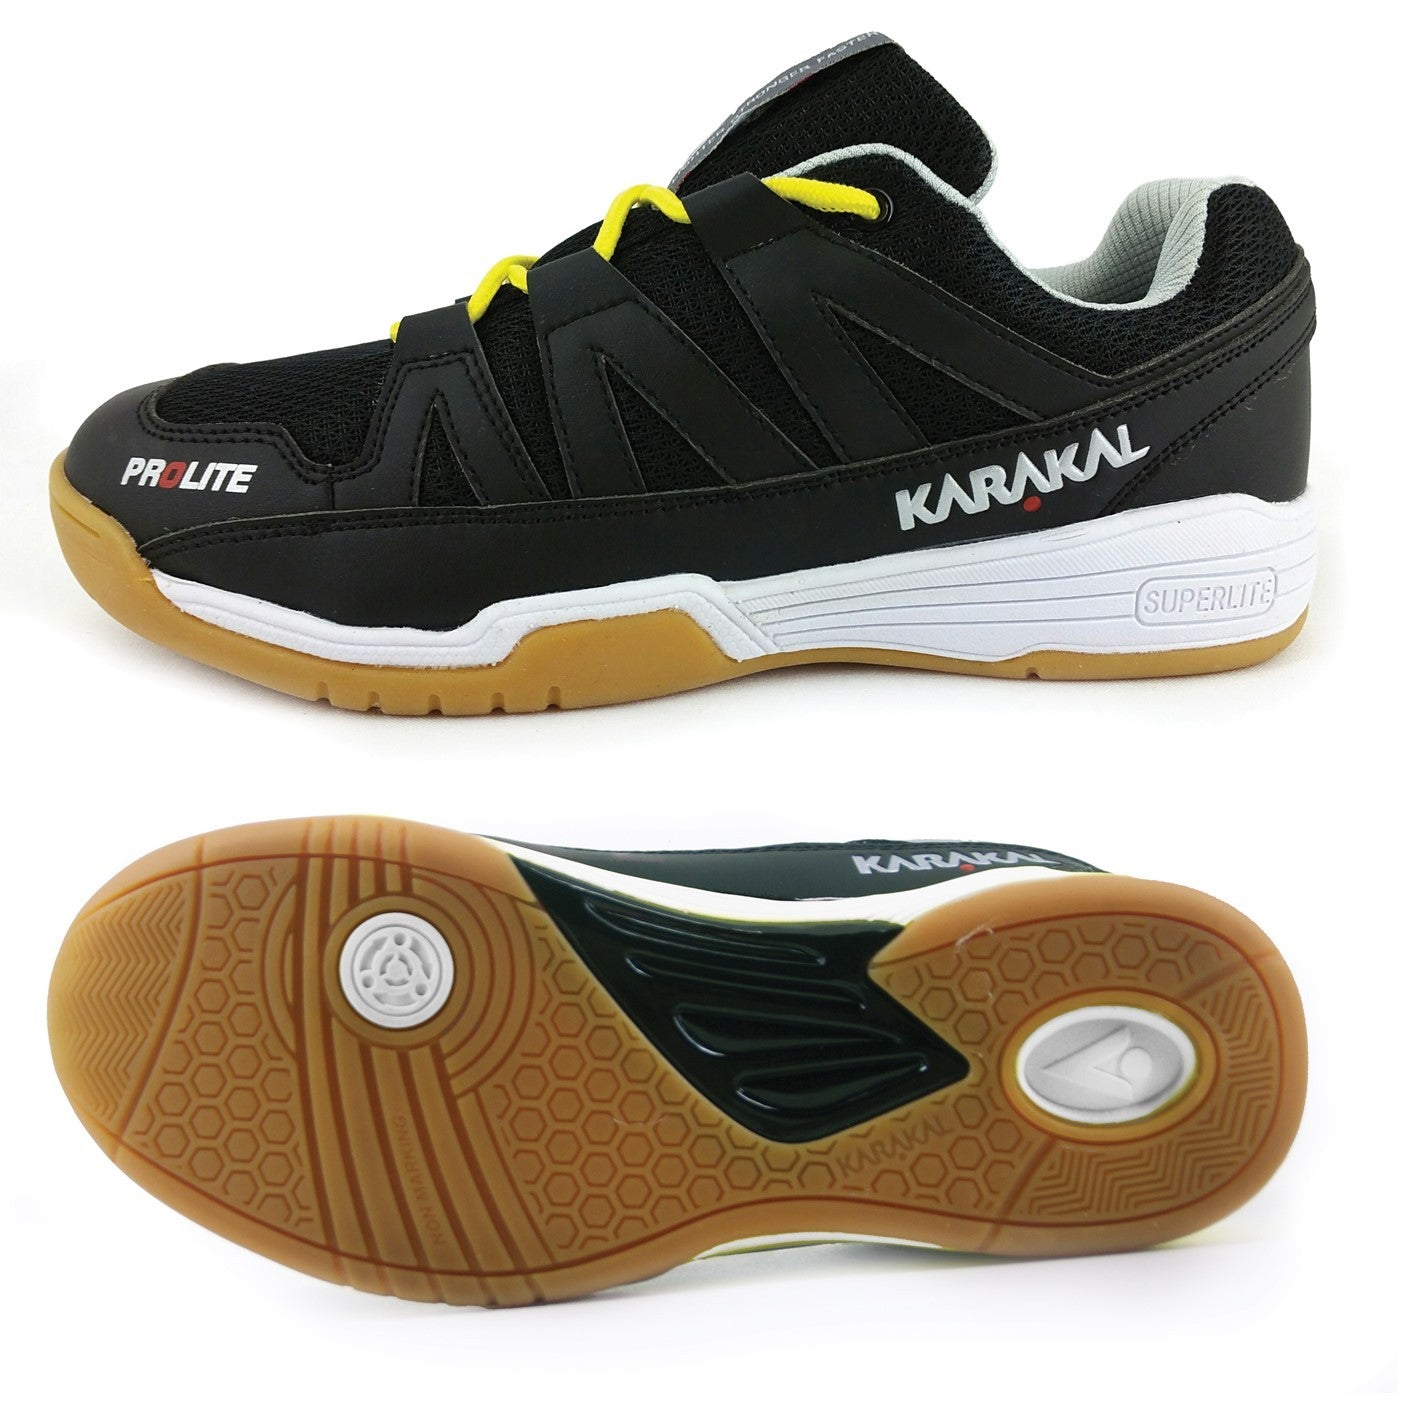 Karakal prolite black mens court shoe